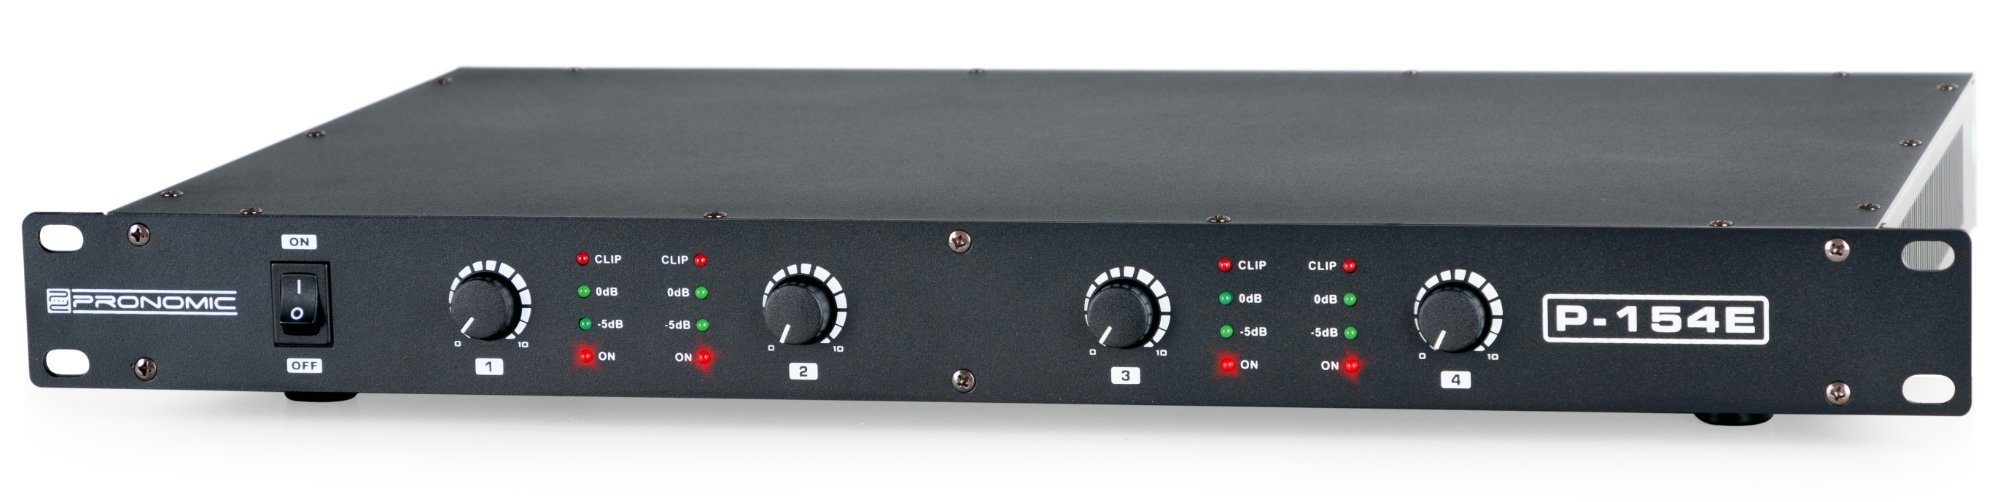 Kanäle: Pronomic 4, Endstufe 600 Studio/HiFi) oder geeignet für P-154E (Anzahl W, MKII 1HE Monitor-Betrieb Audioverstärker